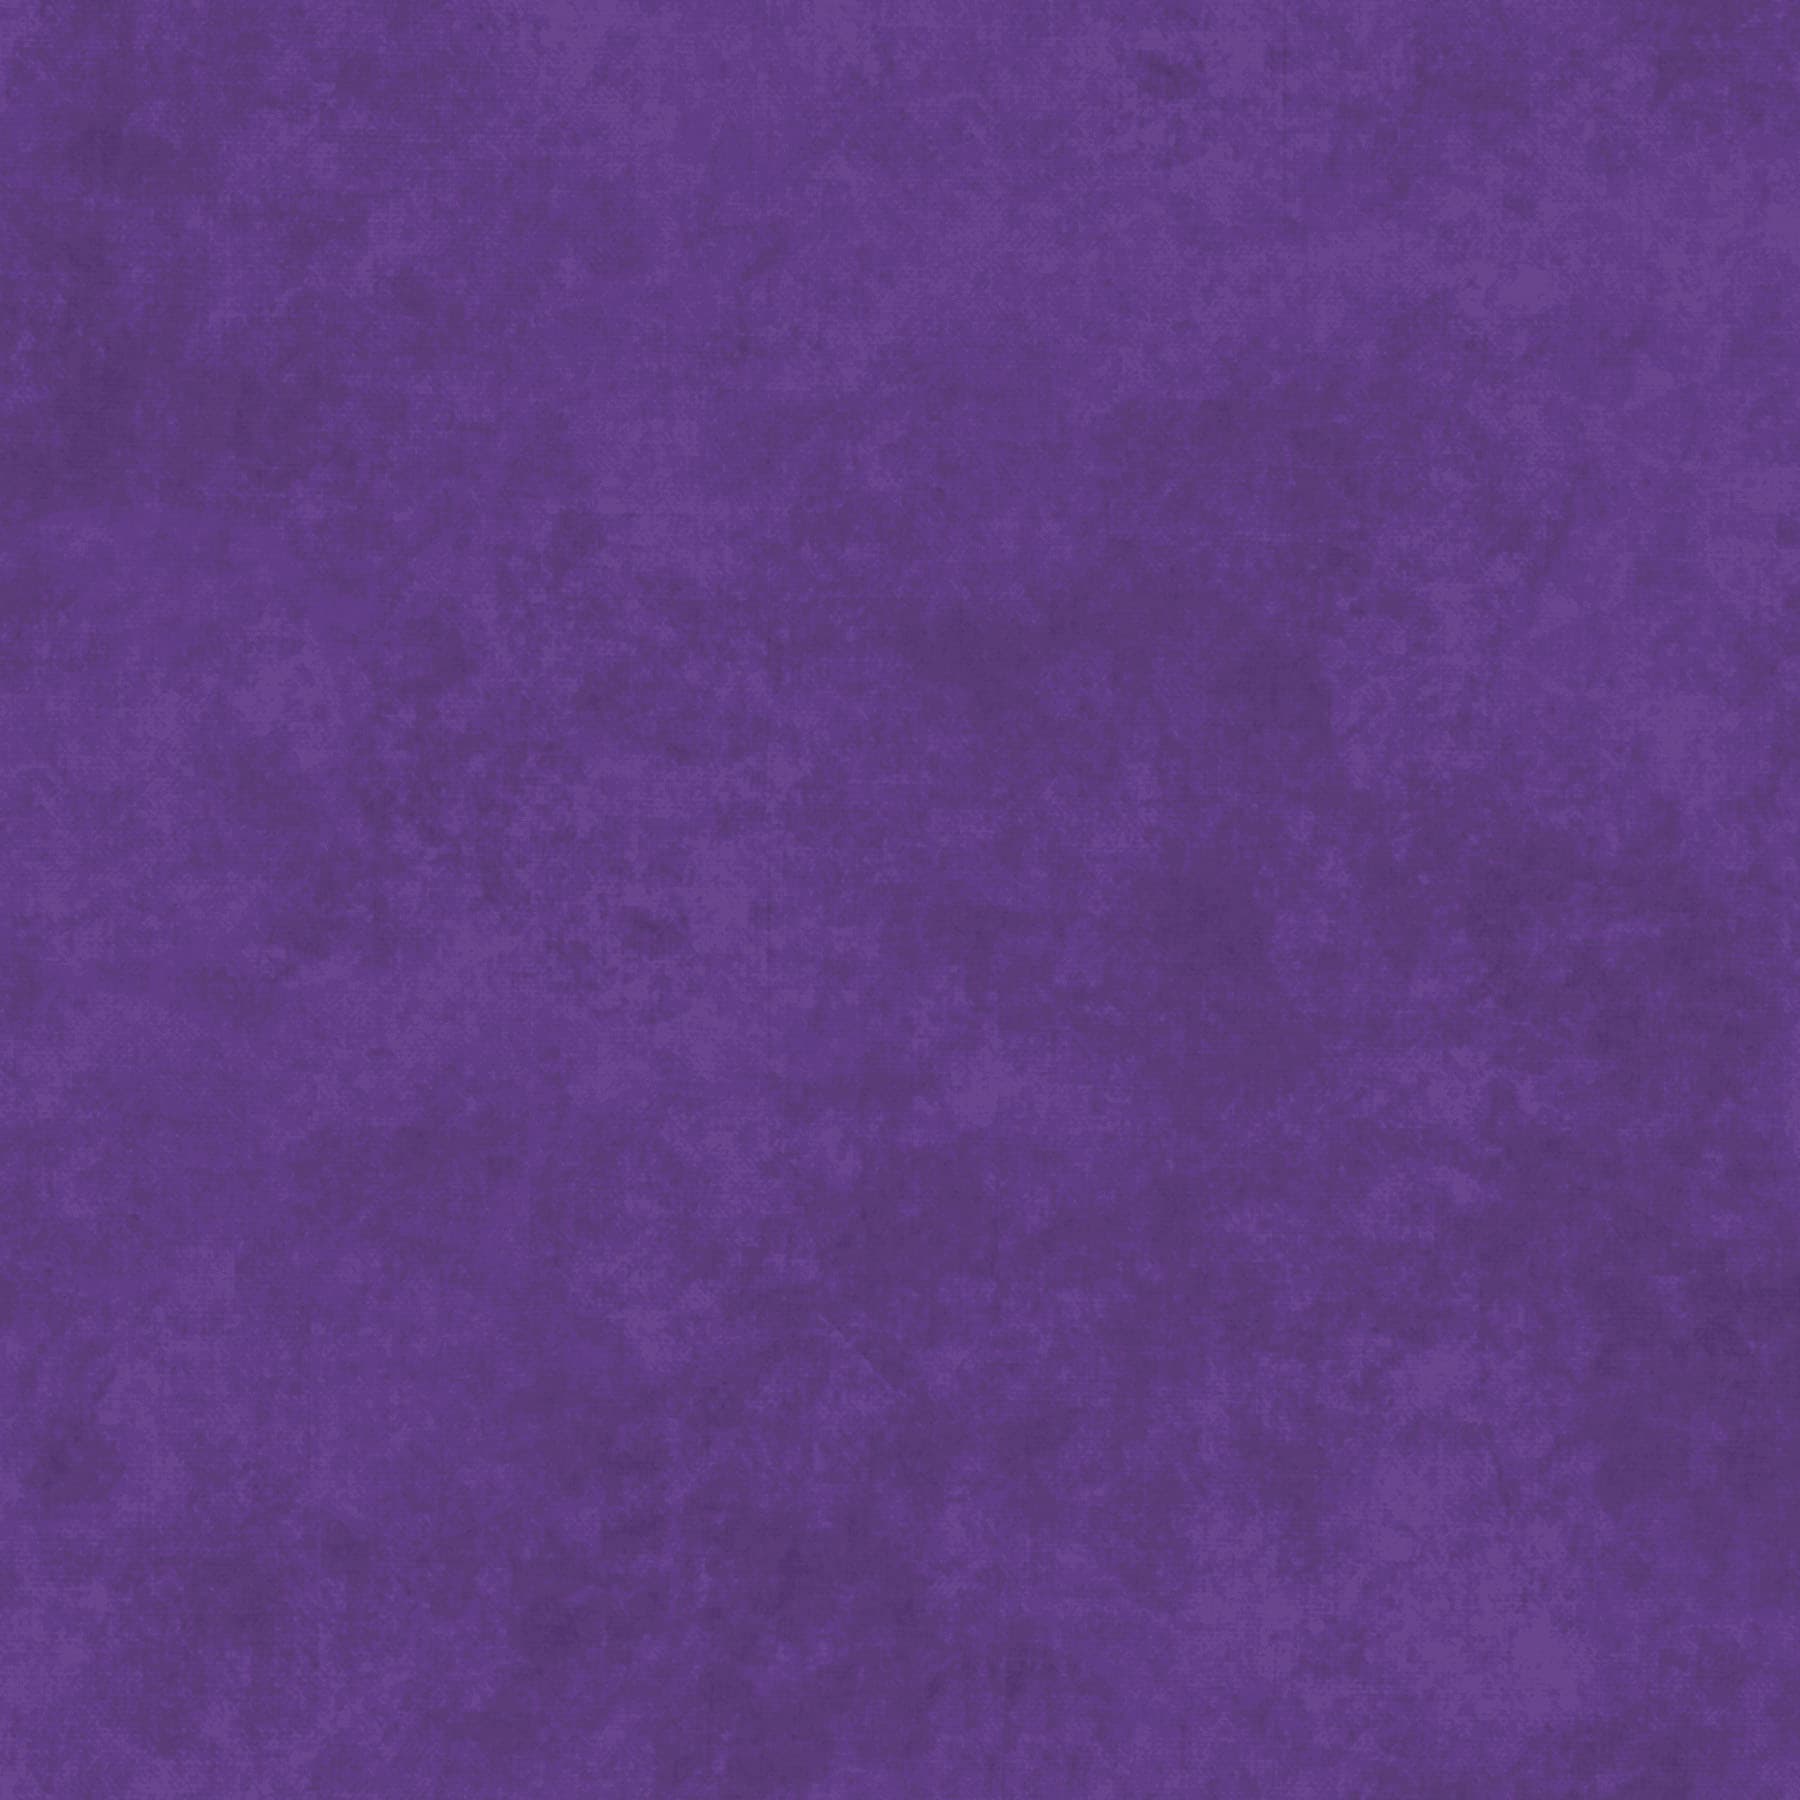 Shadow Play - Iris Purple (513-VY) Tonal Blender by Maywood Studio